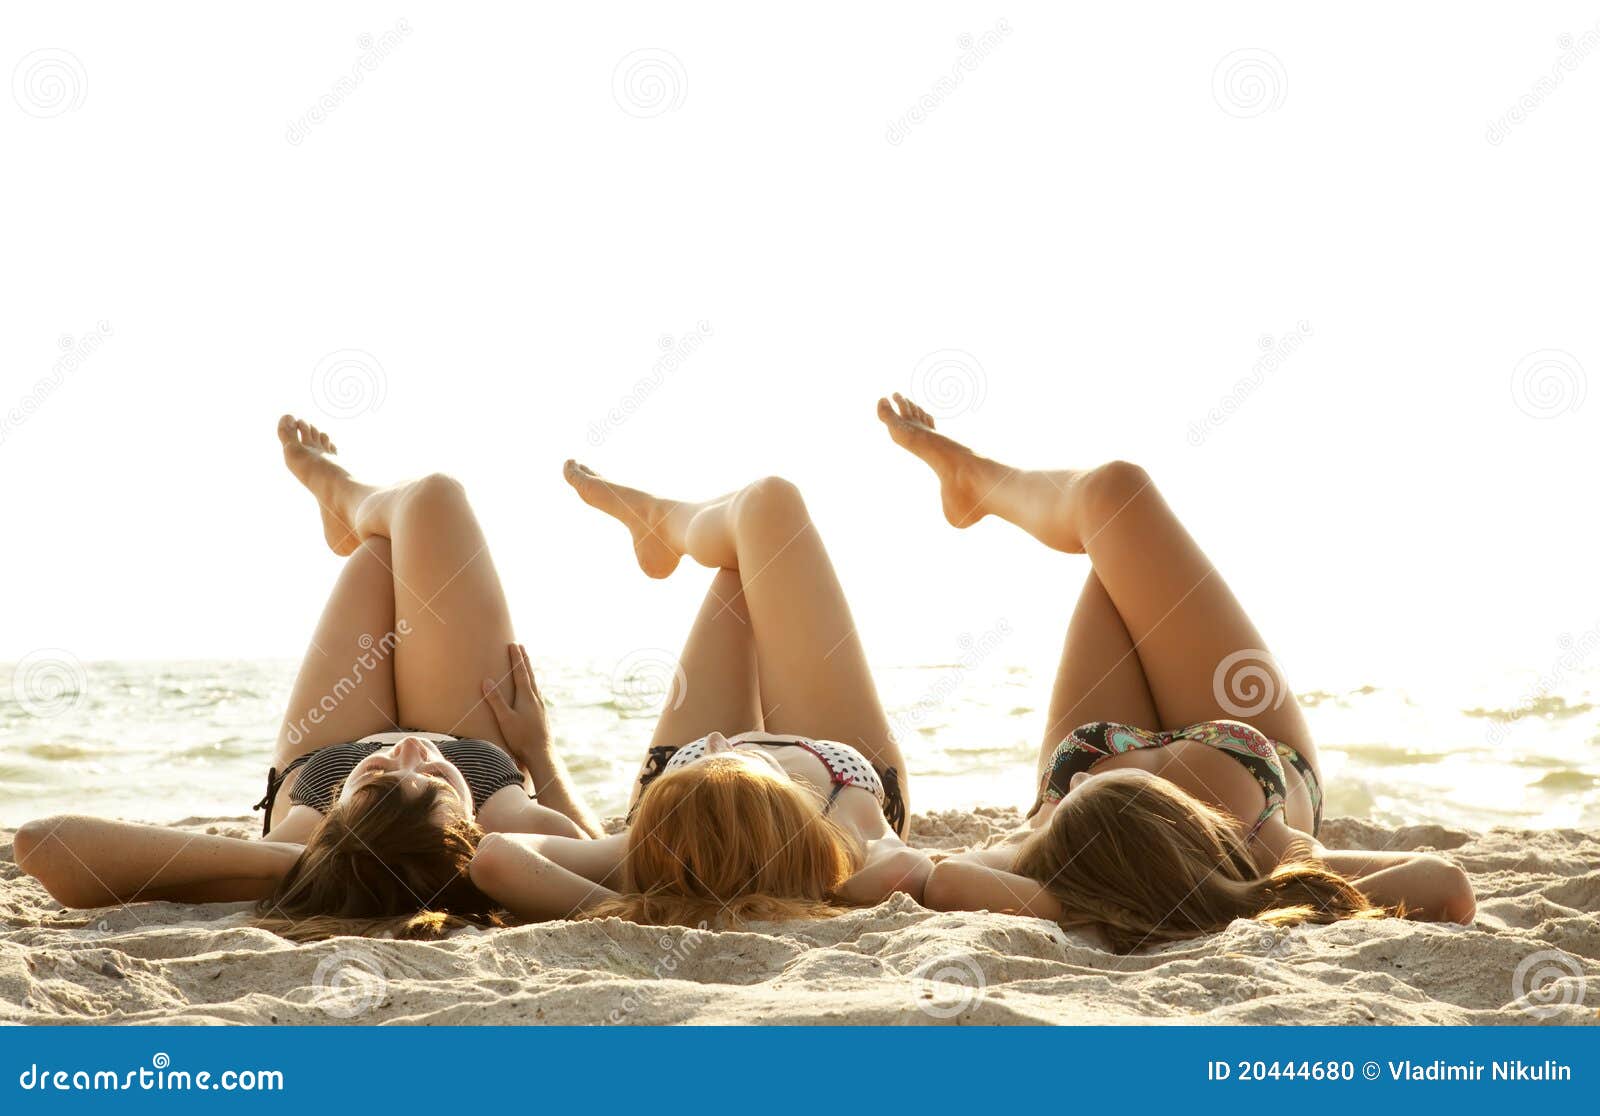 197,855 Bikini Beach Stock Photos